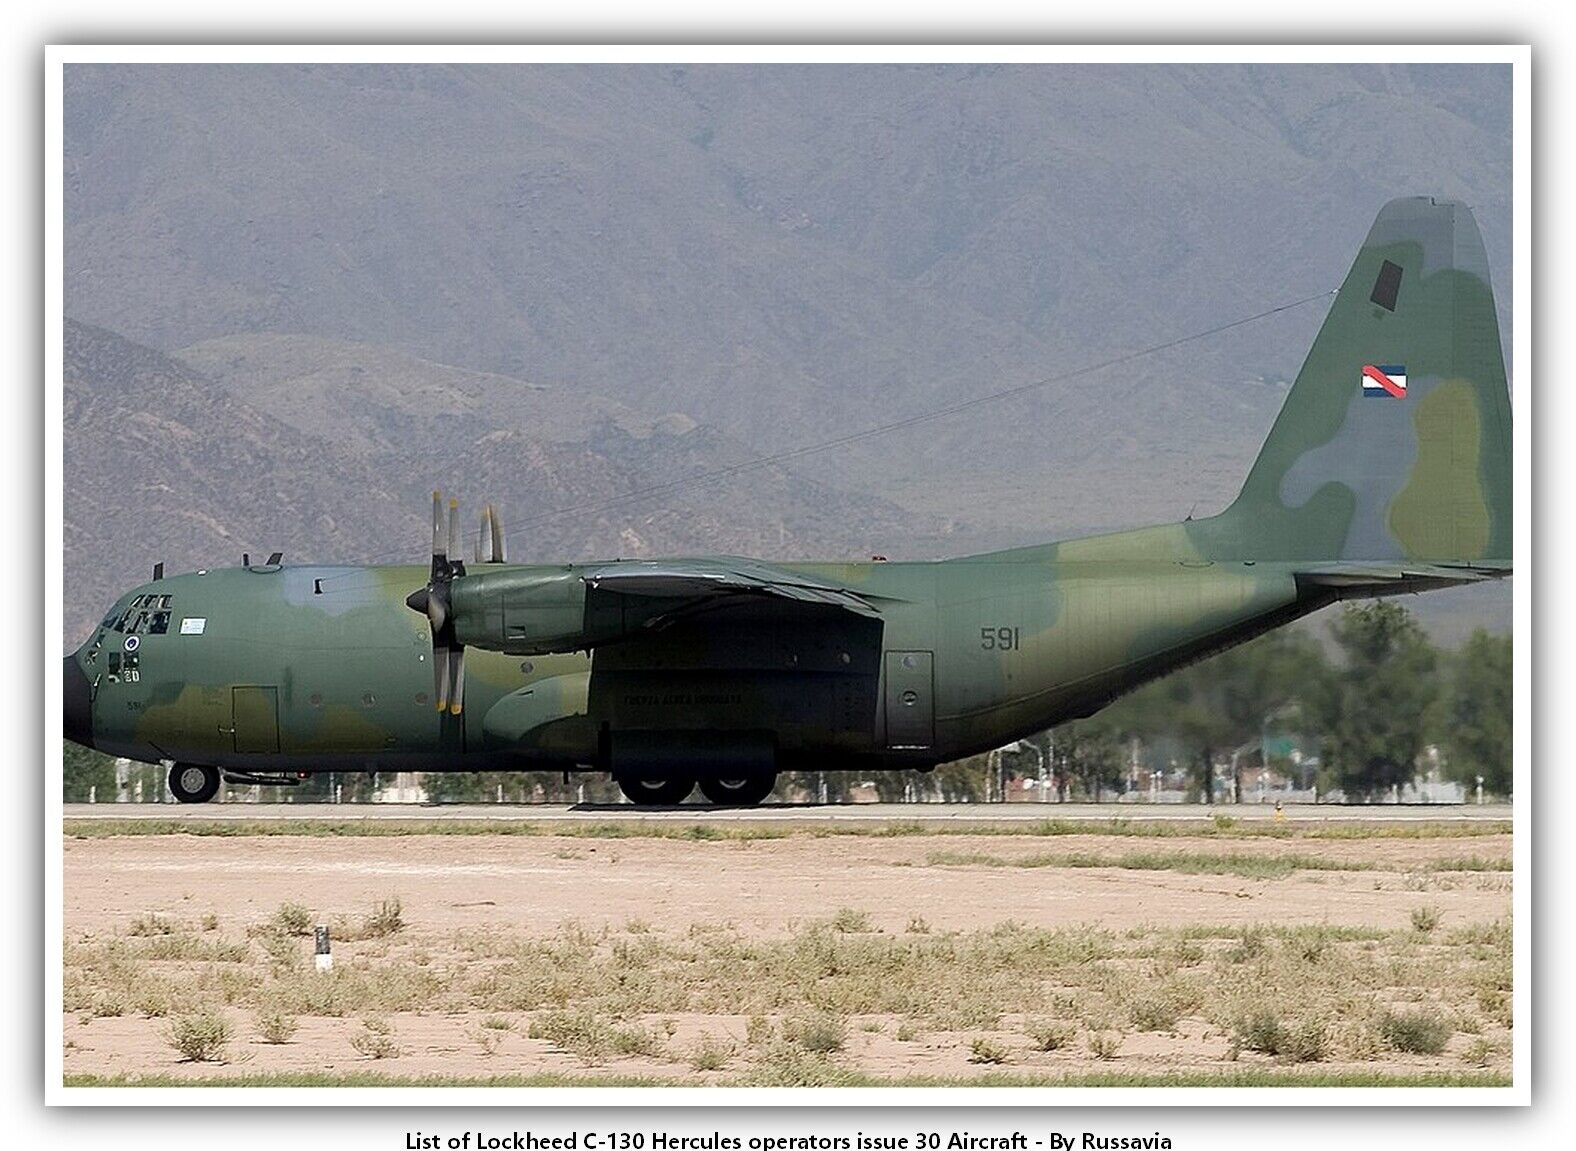 List of Lockheed C-130 Hercules operators issue 30 Aircraft